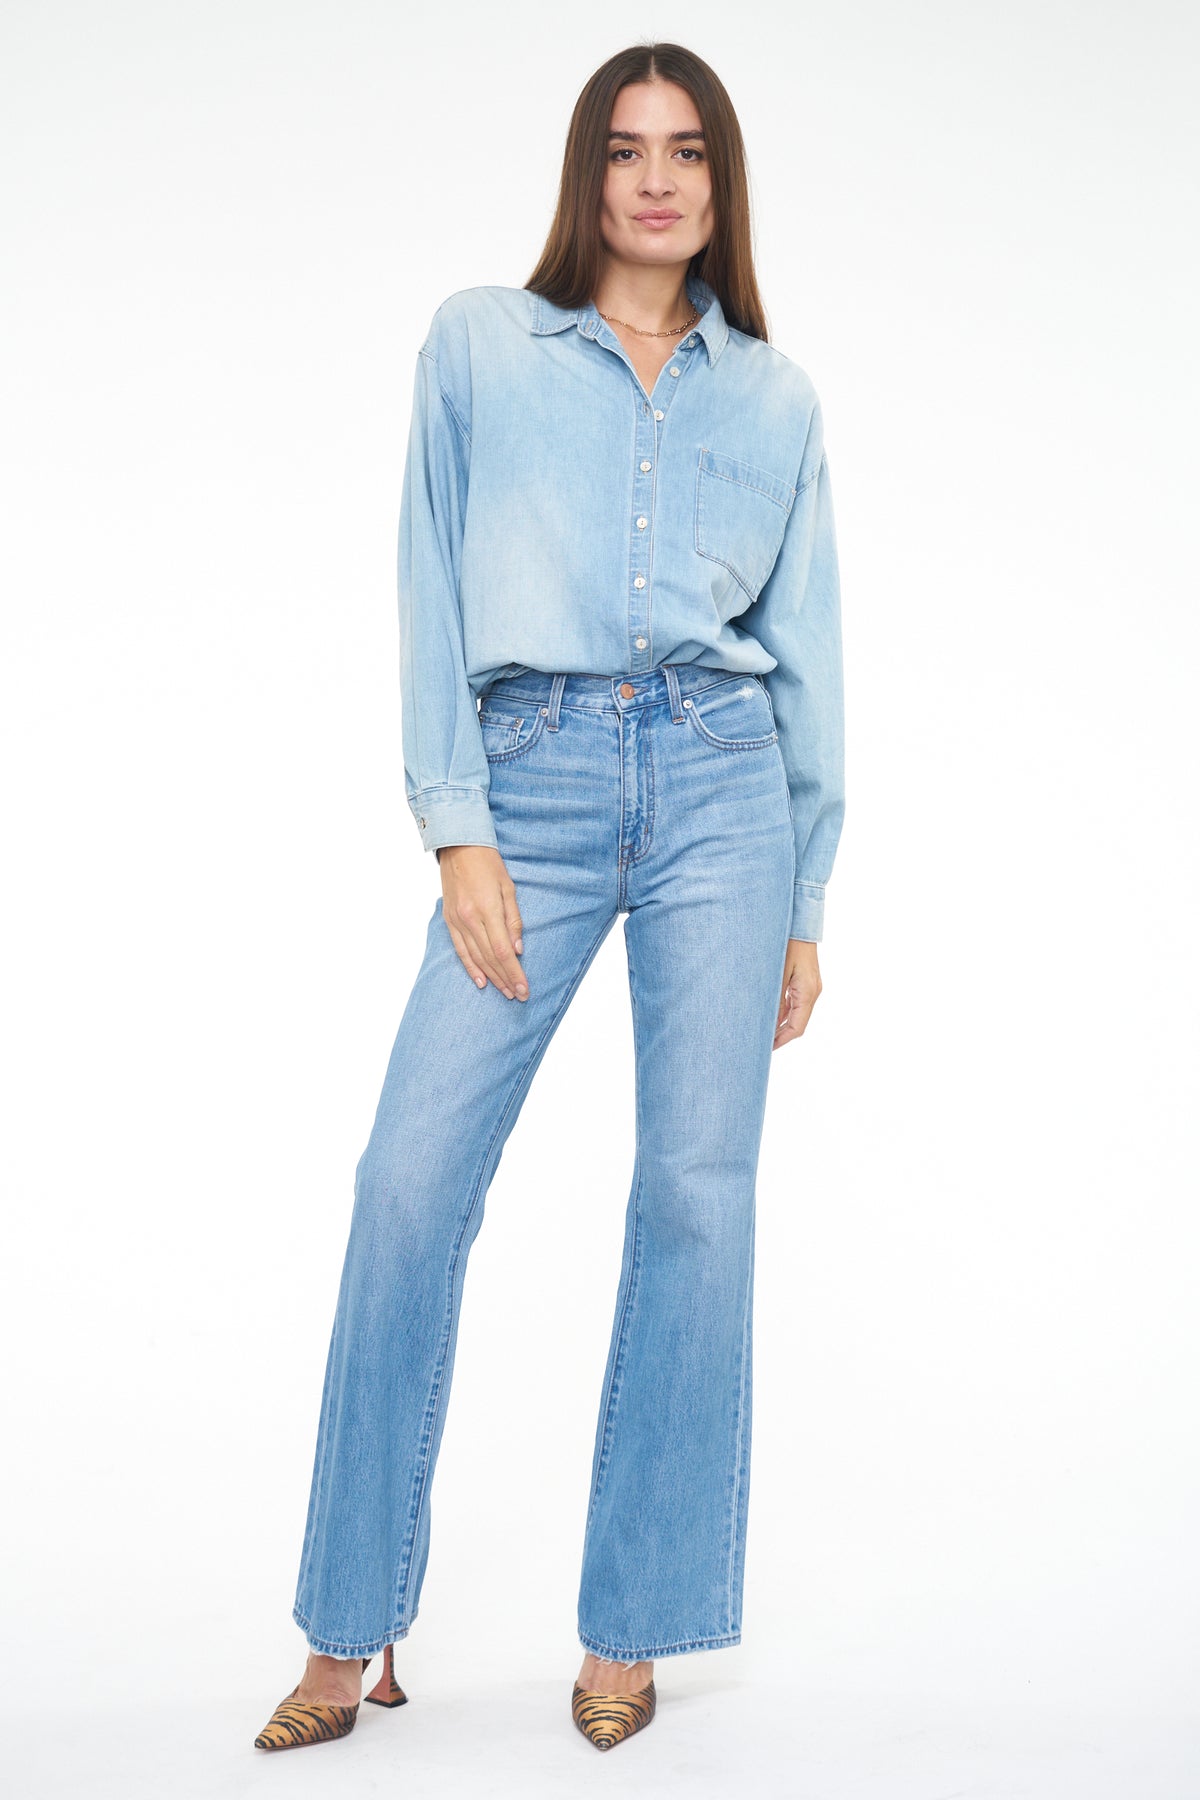 Sloane Long Sleeve Oversized Button Down Shirt - Edgewater